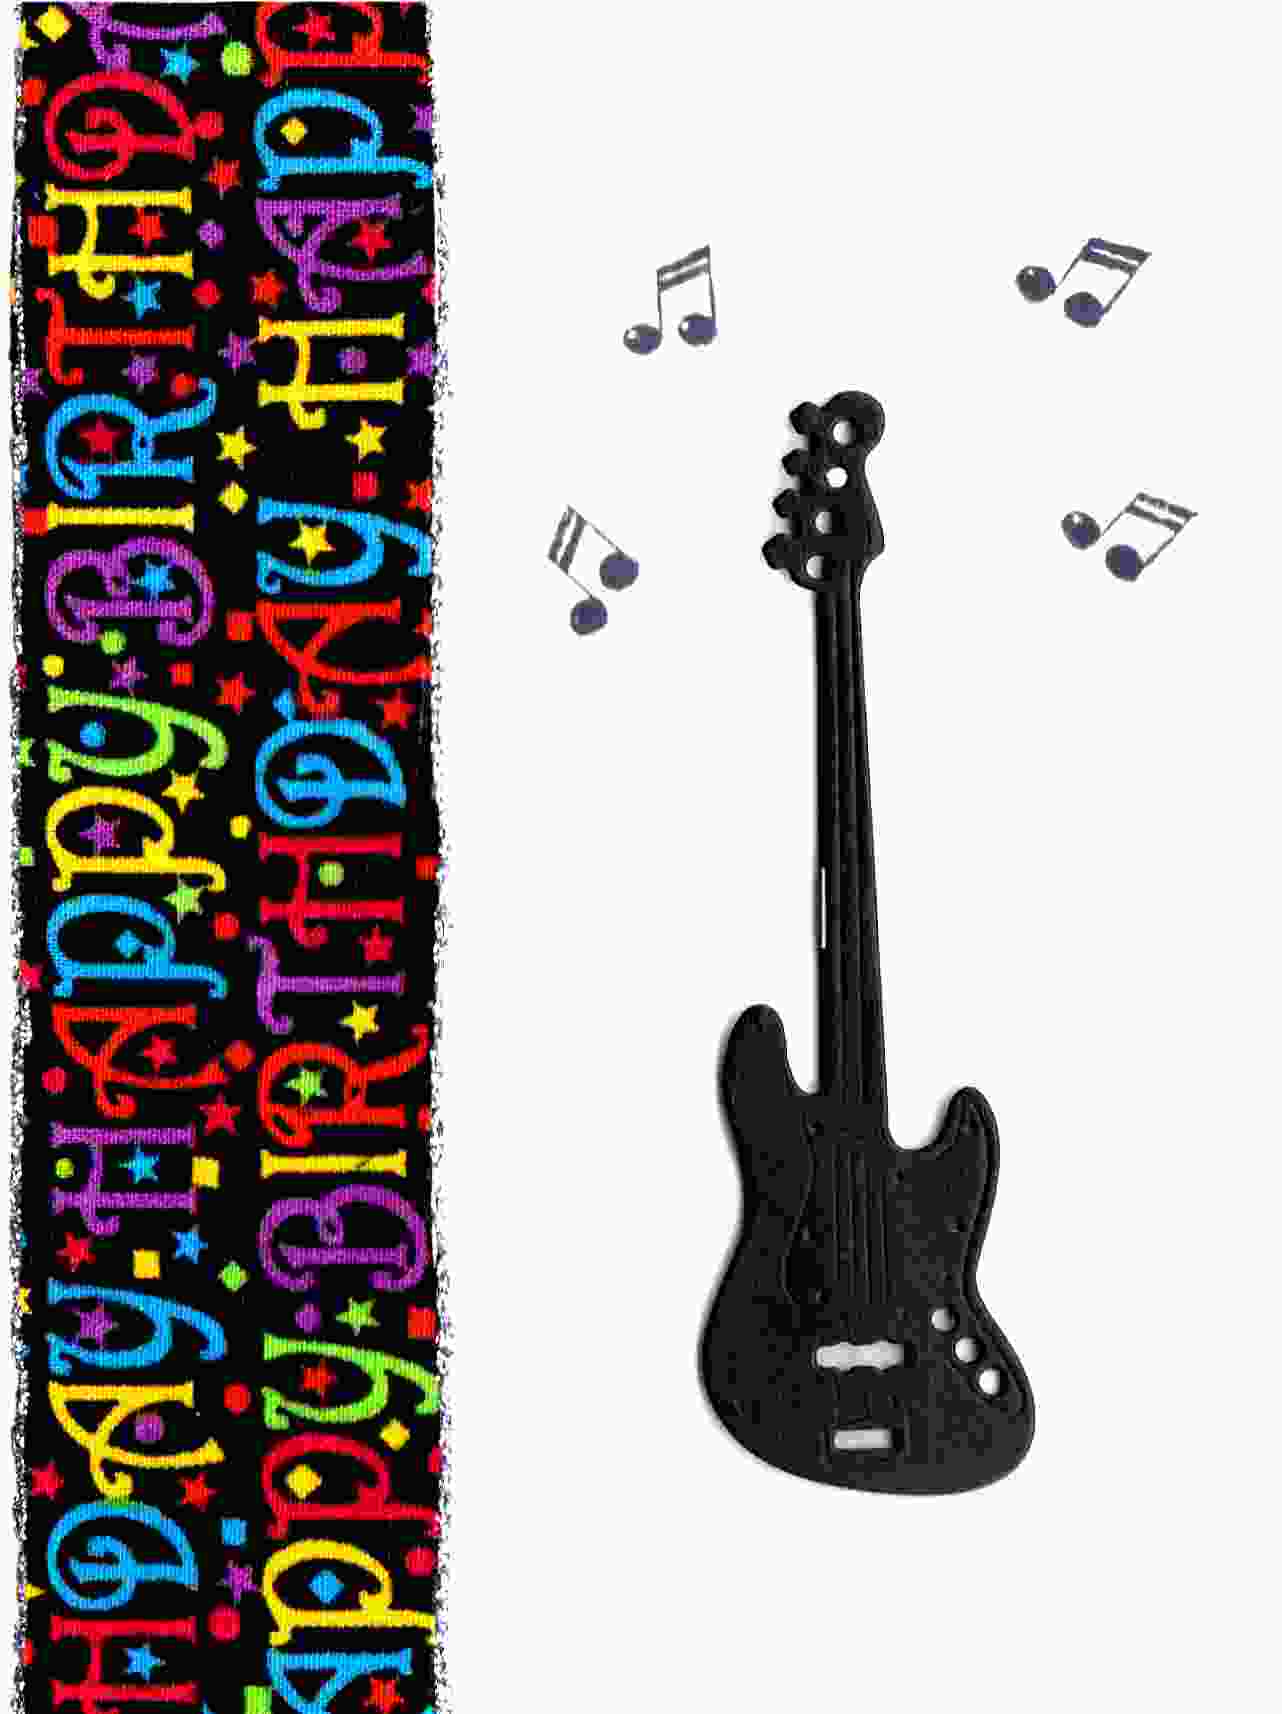 happy birthday bass guitar pick